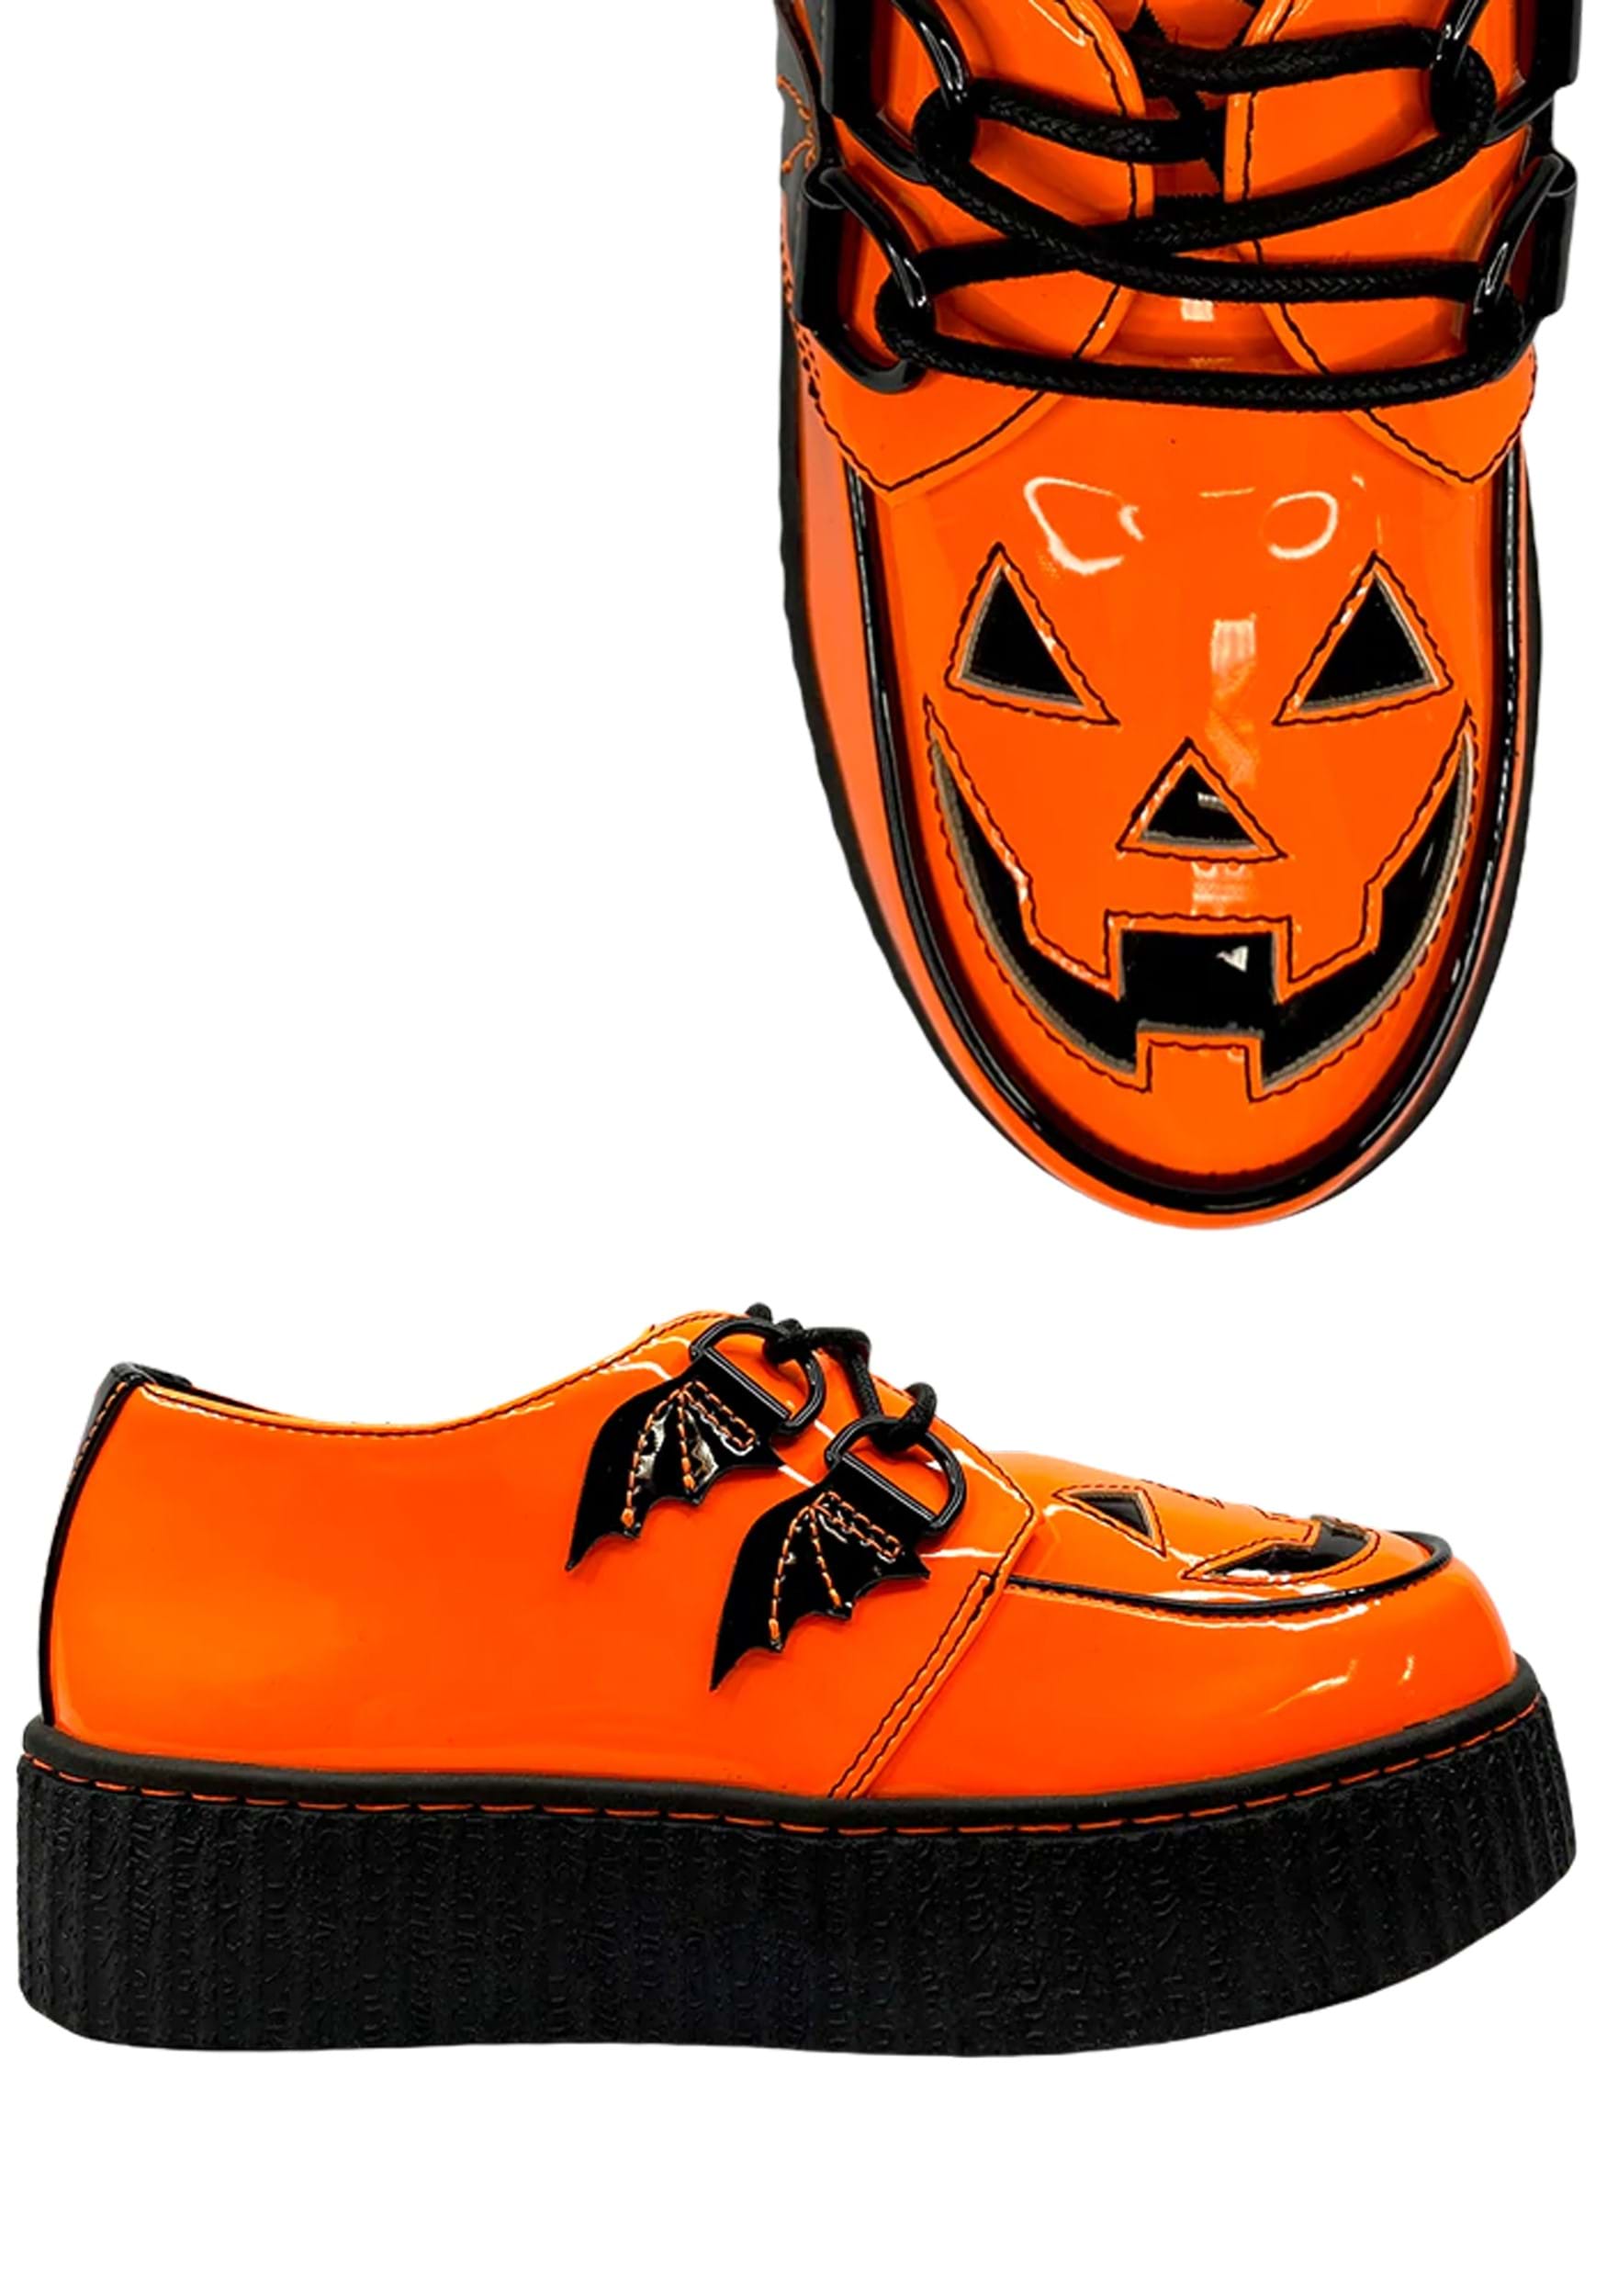 Image of Patent Orange Jack O' Lantern Creeper Shoes ID SVKRYPTJACK-OR/BK-6